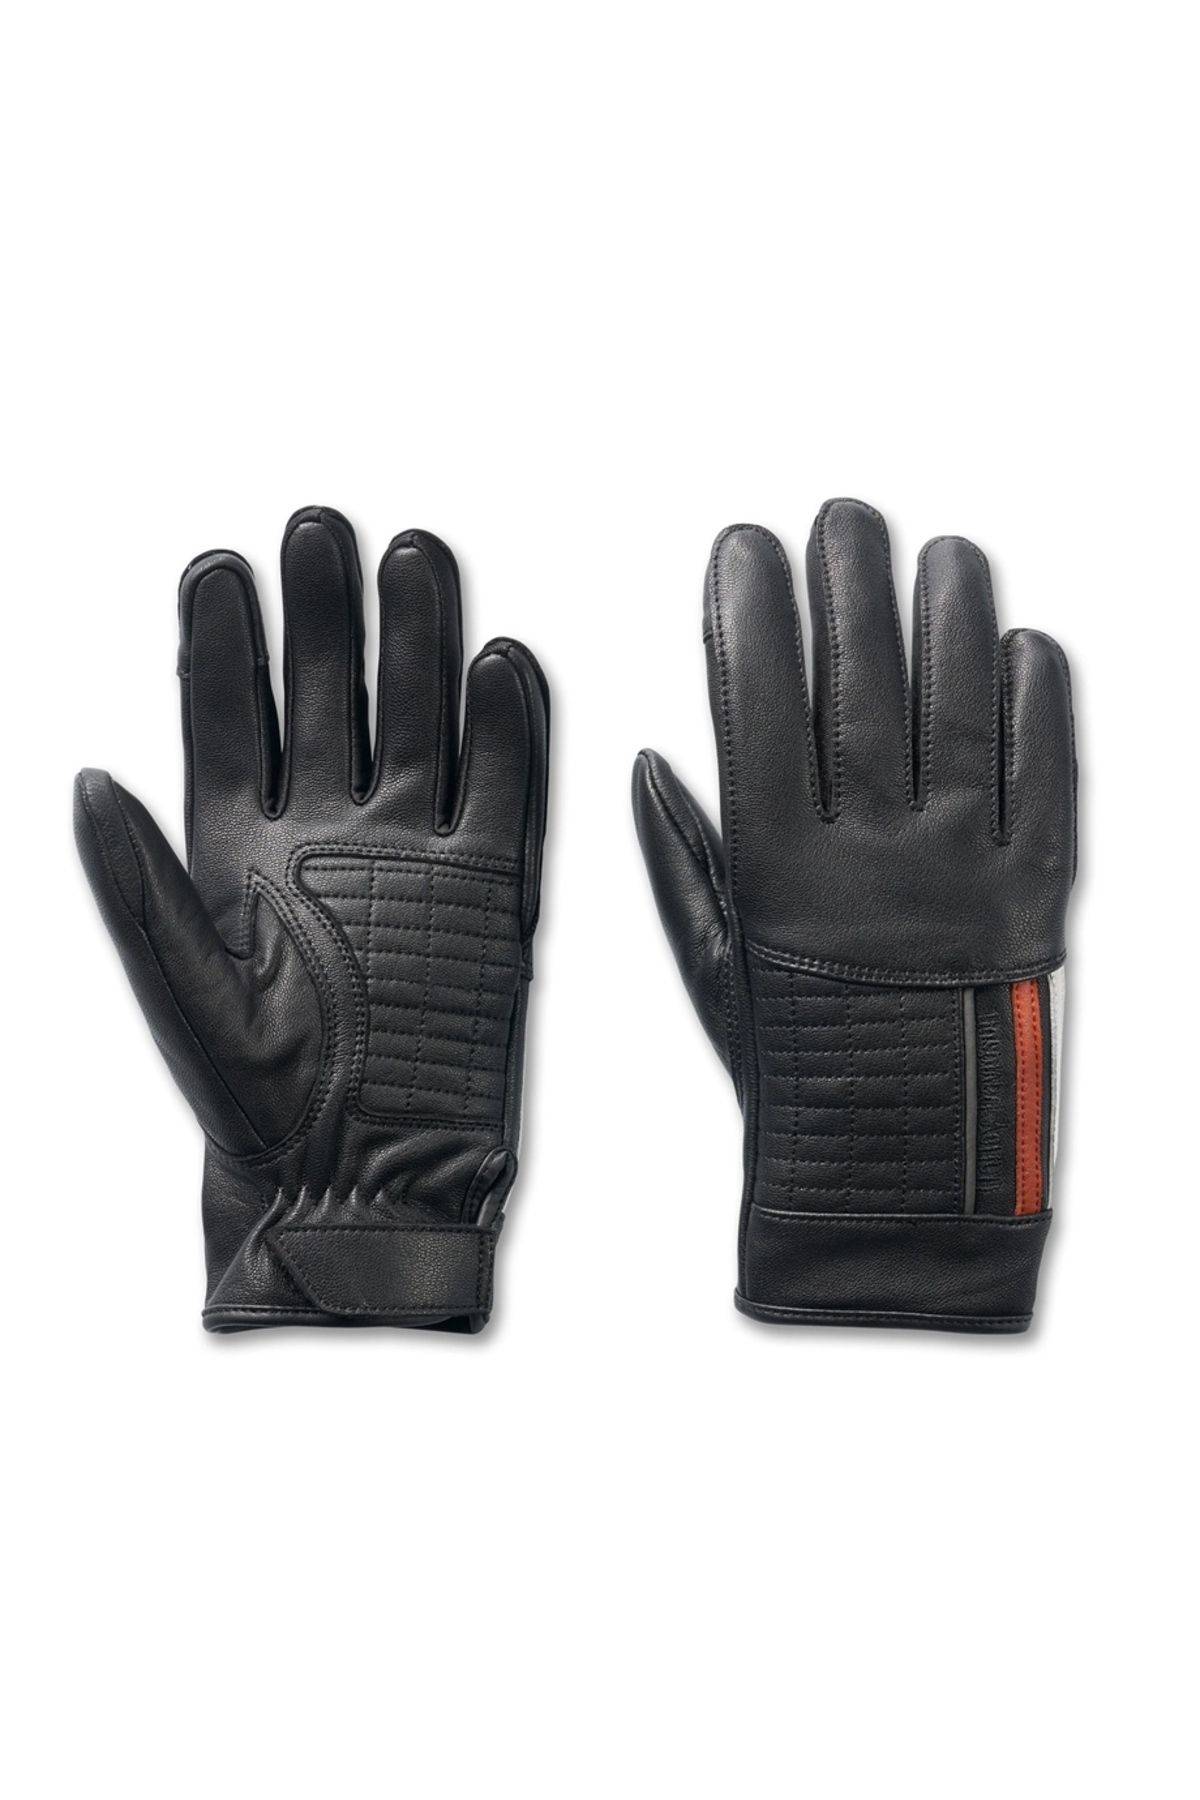 Harley Davidson Harley-davidson Women's South Shore Leather Gloves